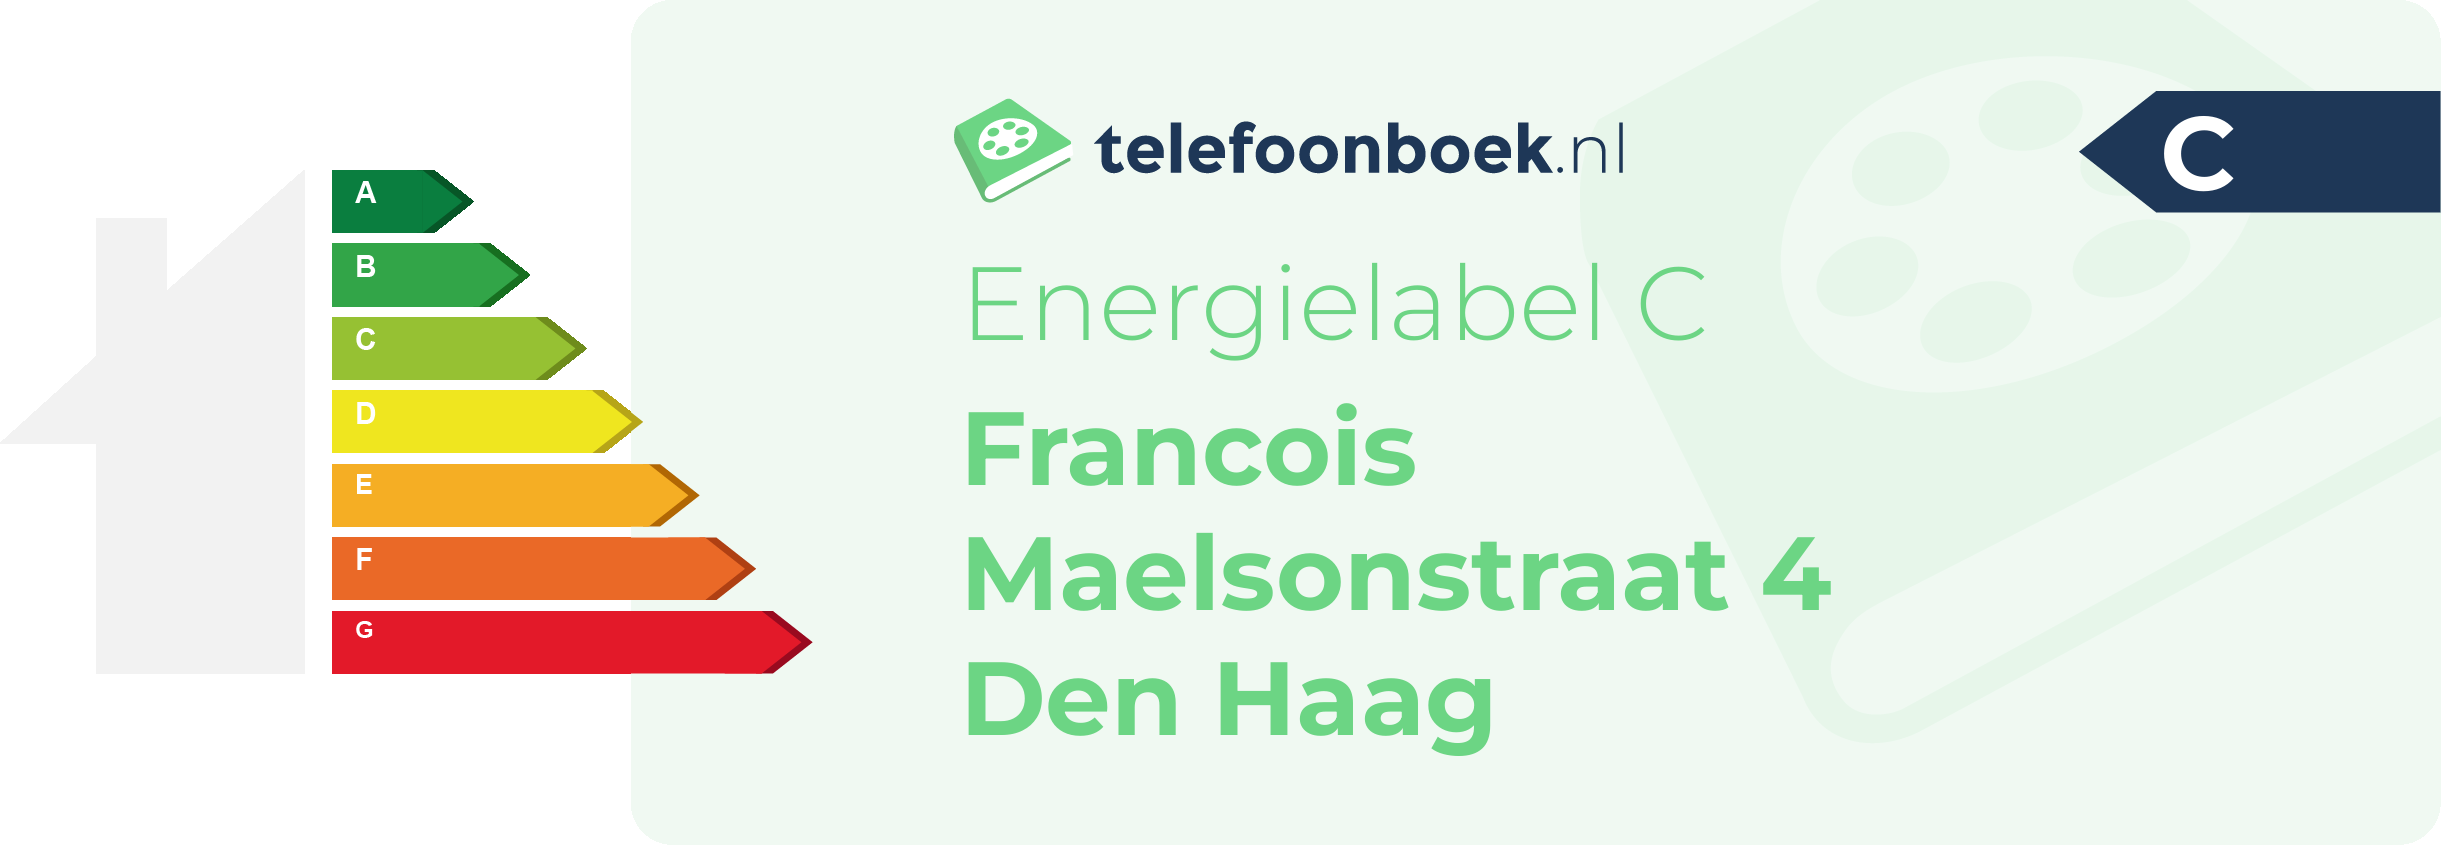 Energielabel Francois Maelsonstraat 4 Den Haag